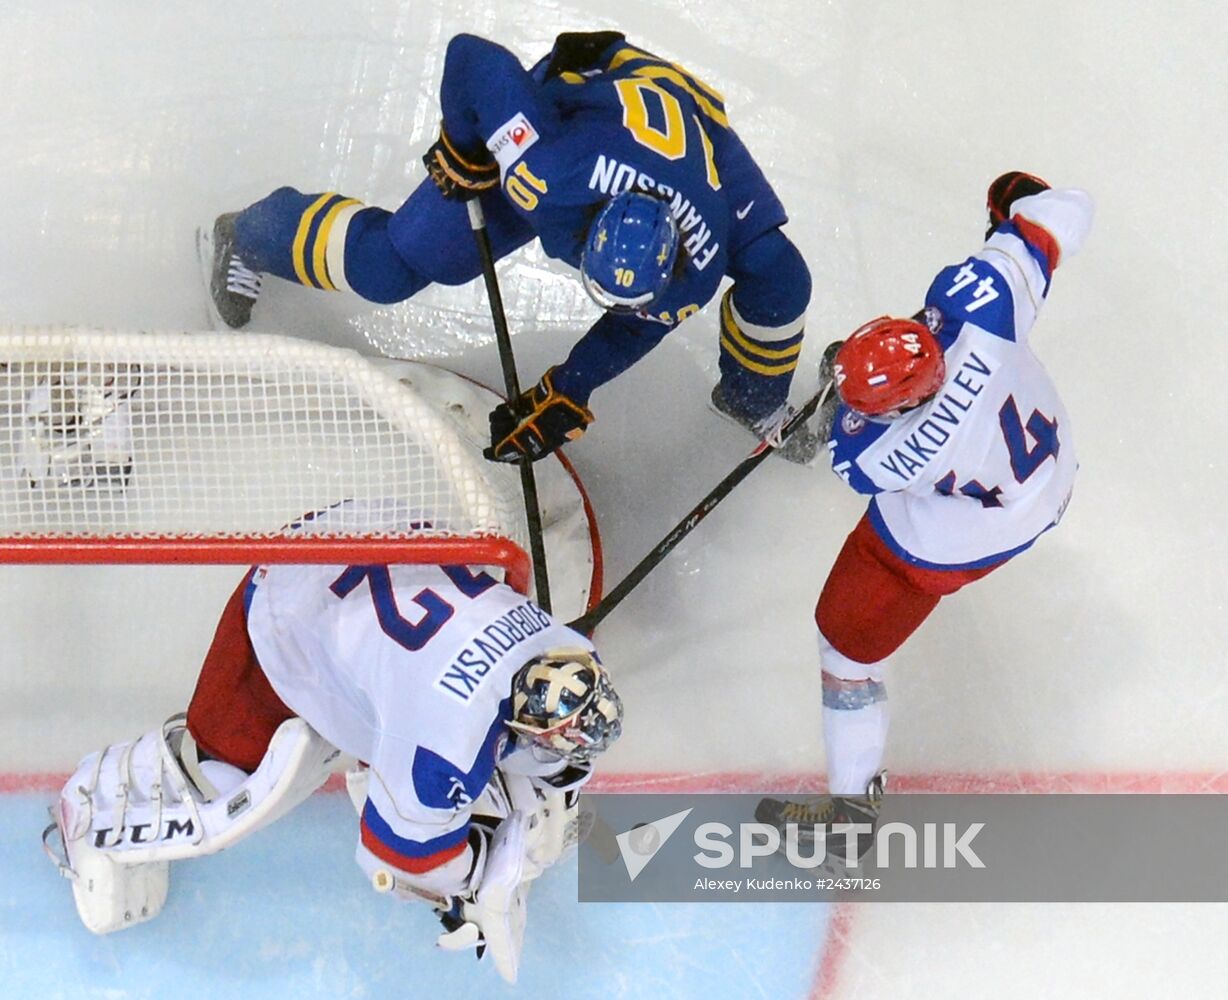 2014 Men's World Ice Hockey Championships. Russia vs. Sweden